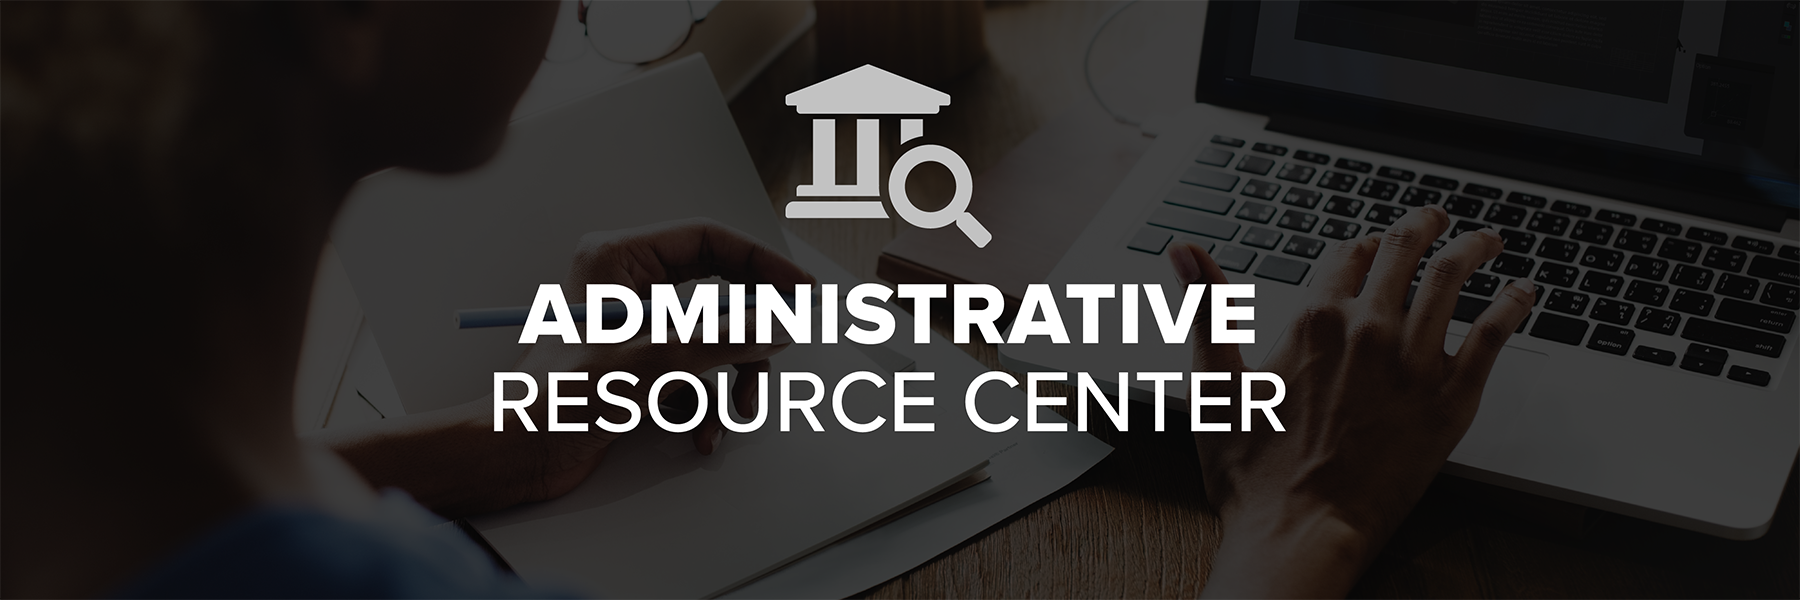 Administrative Resource Center